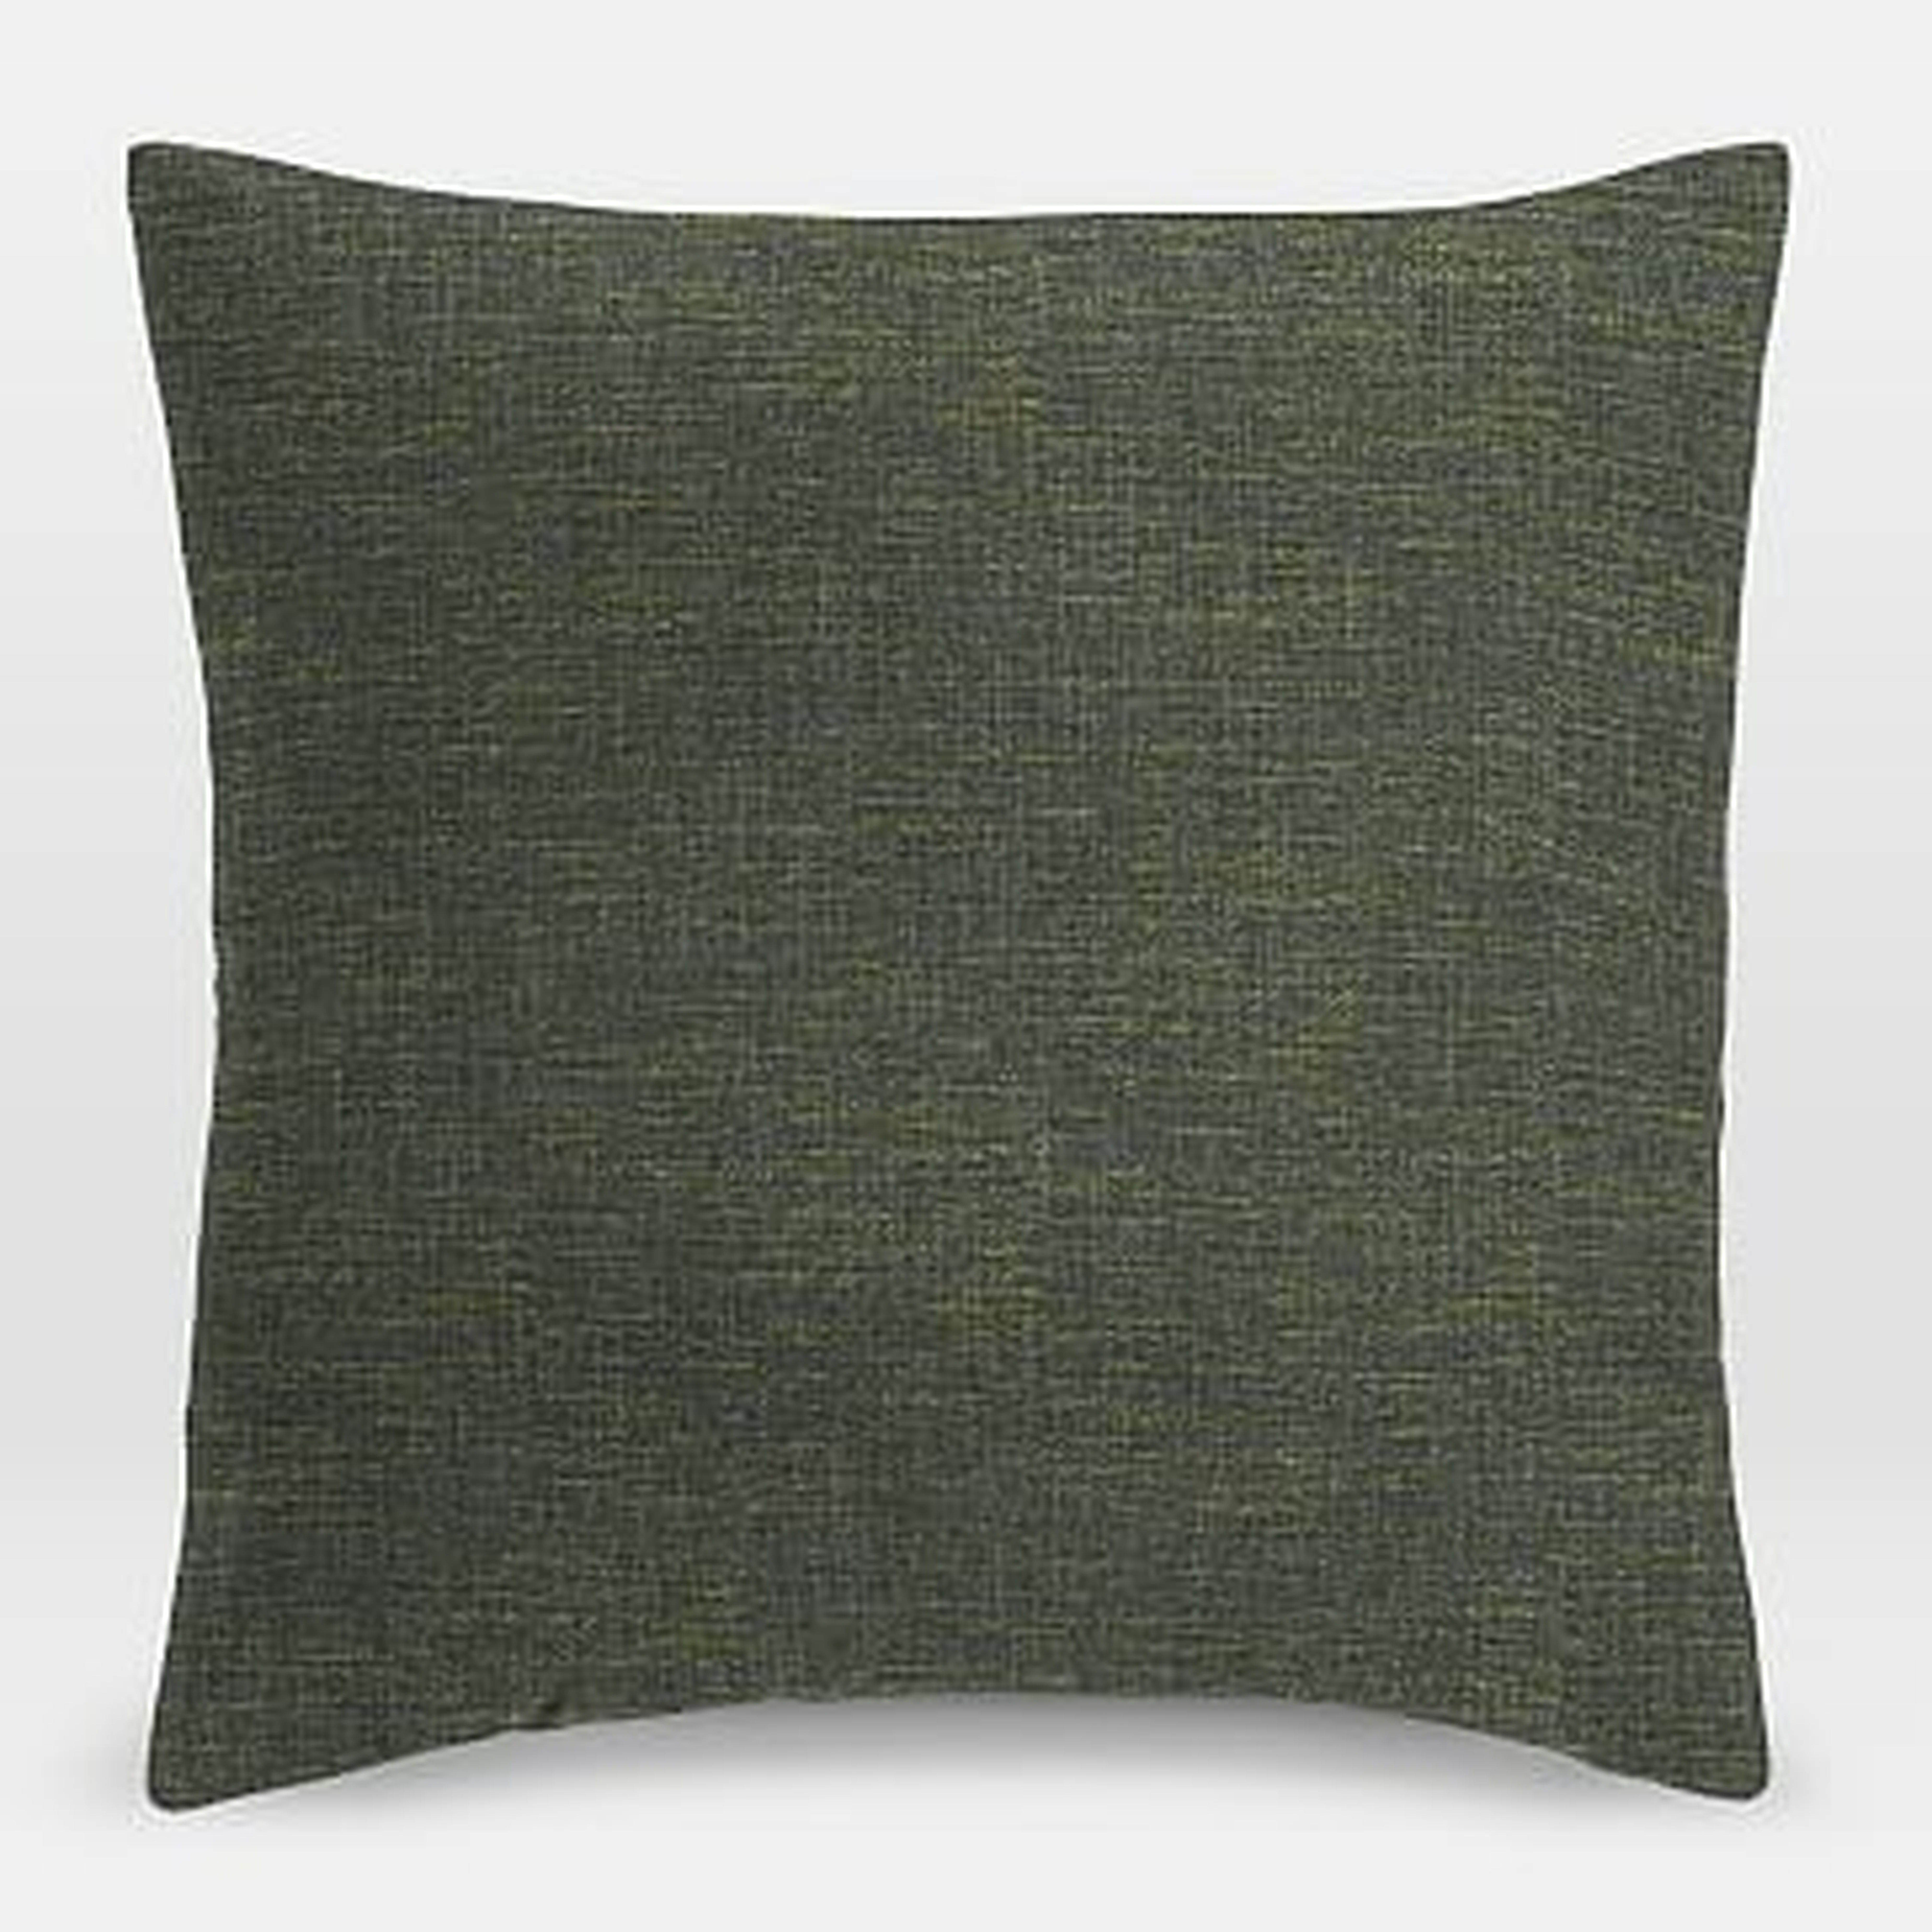 Upholstery Fabric Pillow Cover, 18"x18" Welt Seam, Heathered Tweed, Leek - West Elm